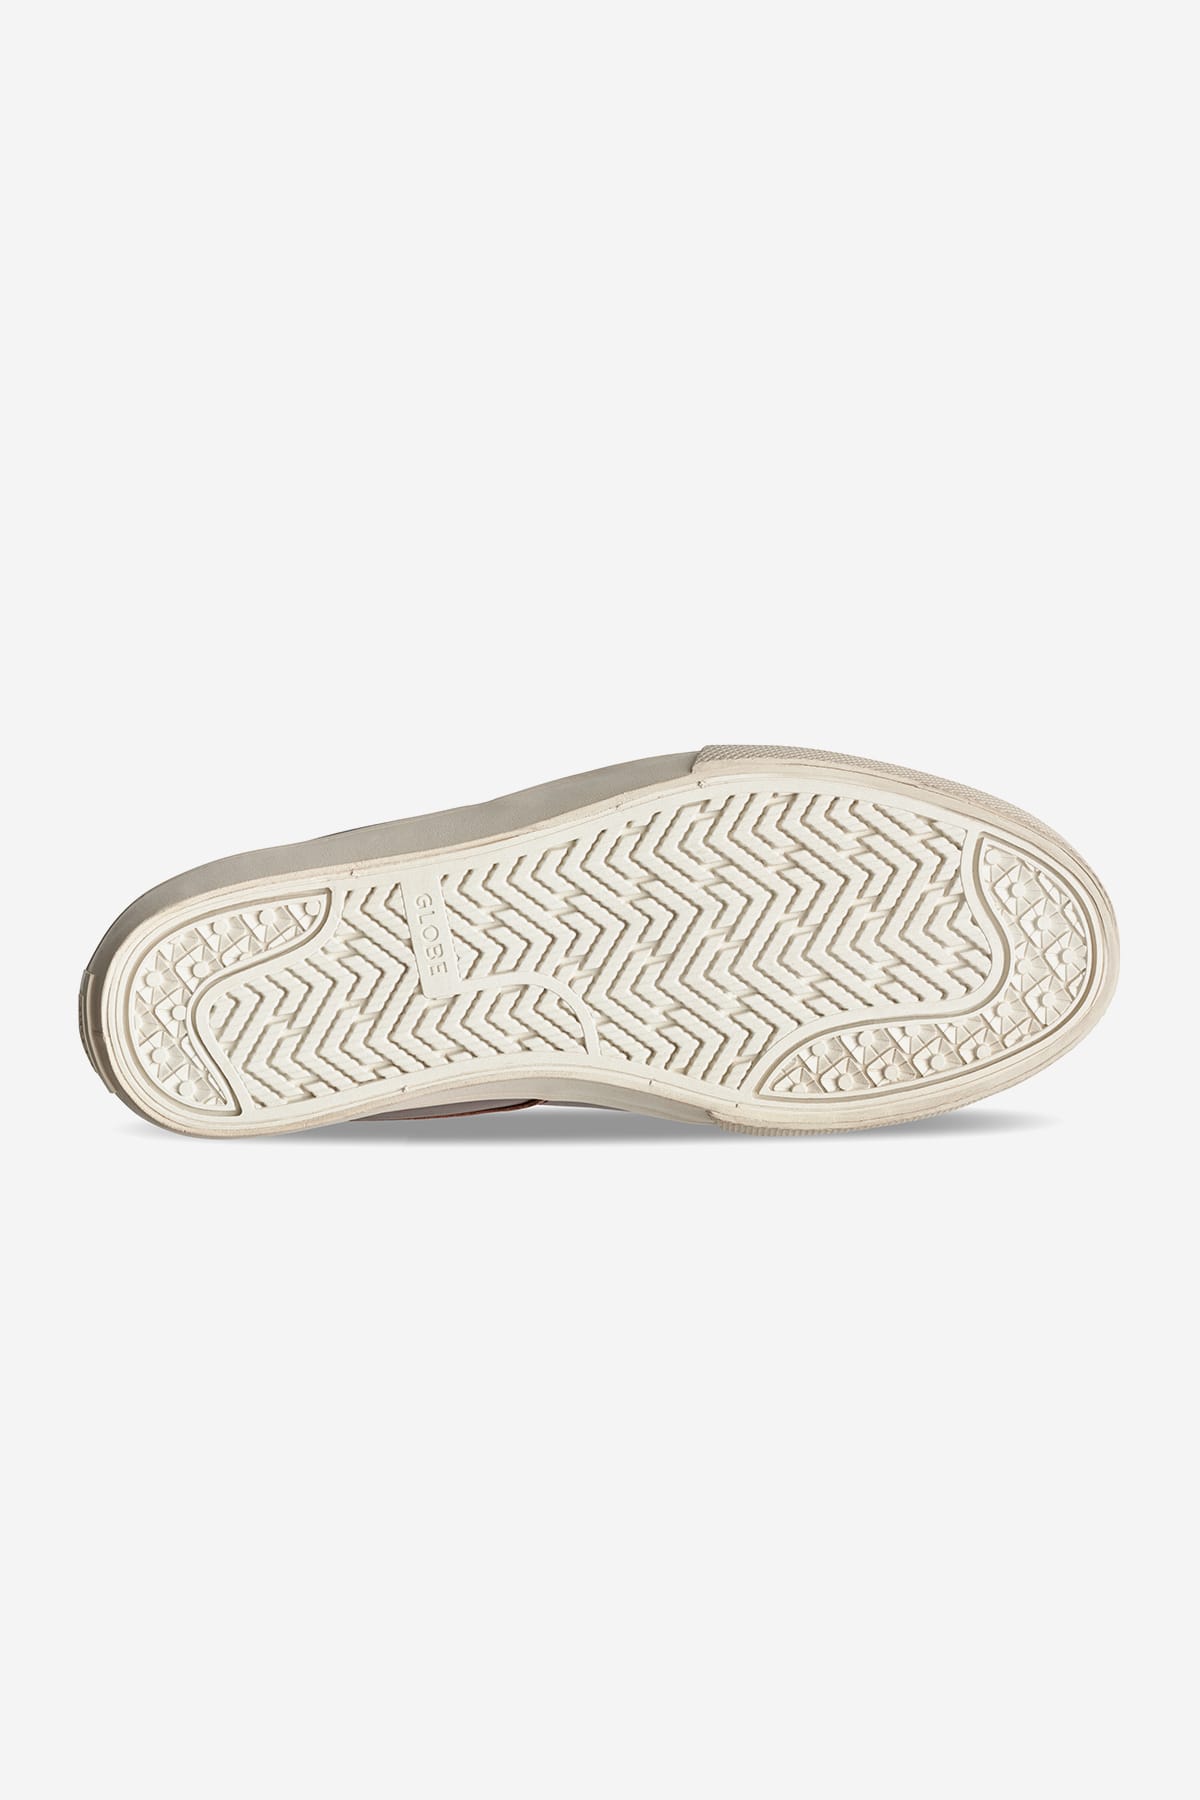 Globe - Liaizon - Oxblood/Maalouf - skateboard Shoes